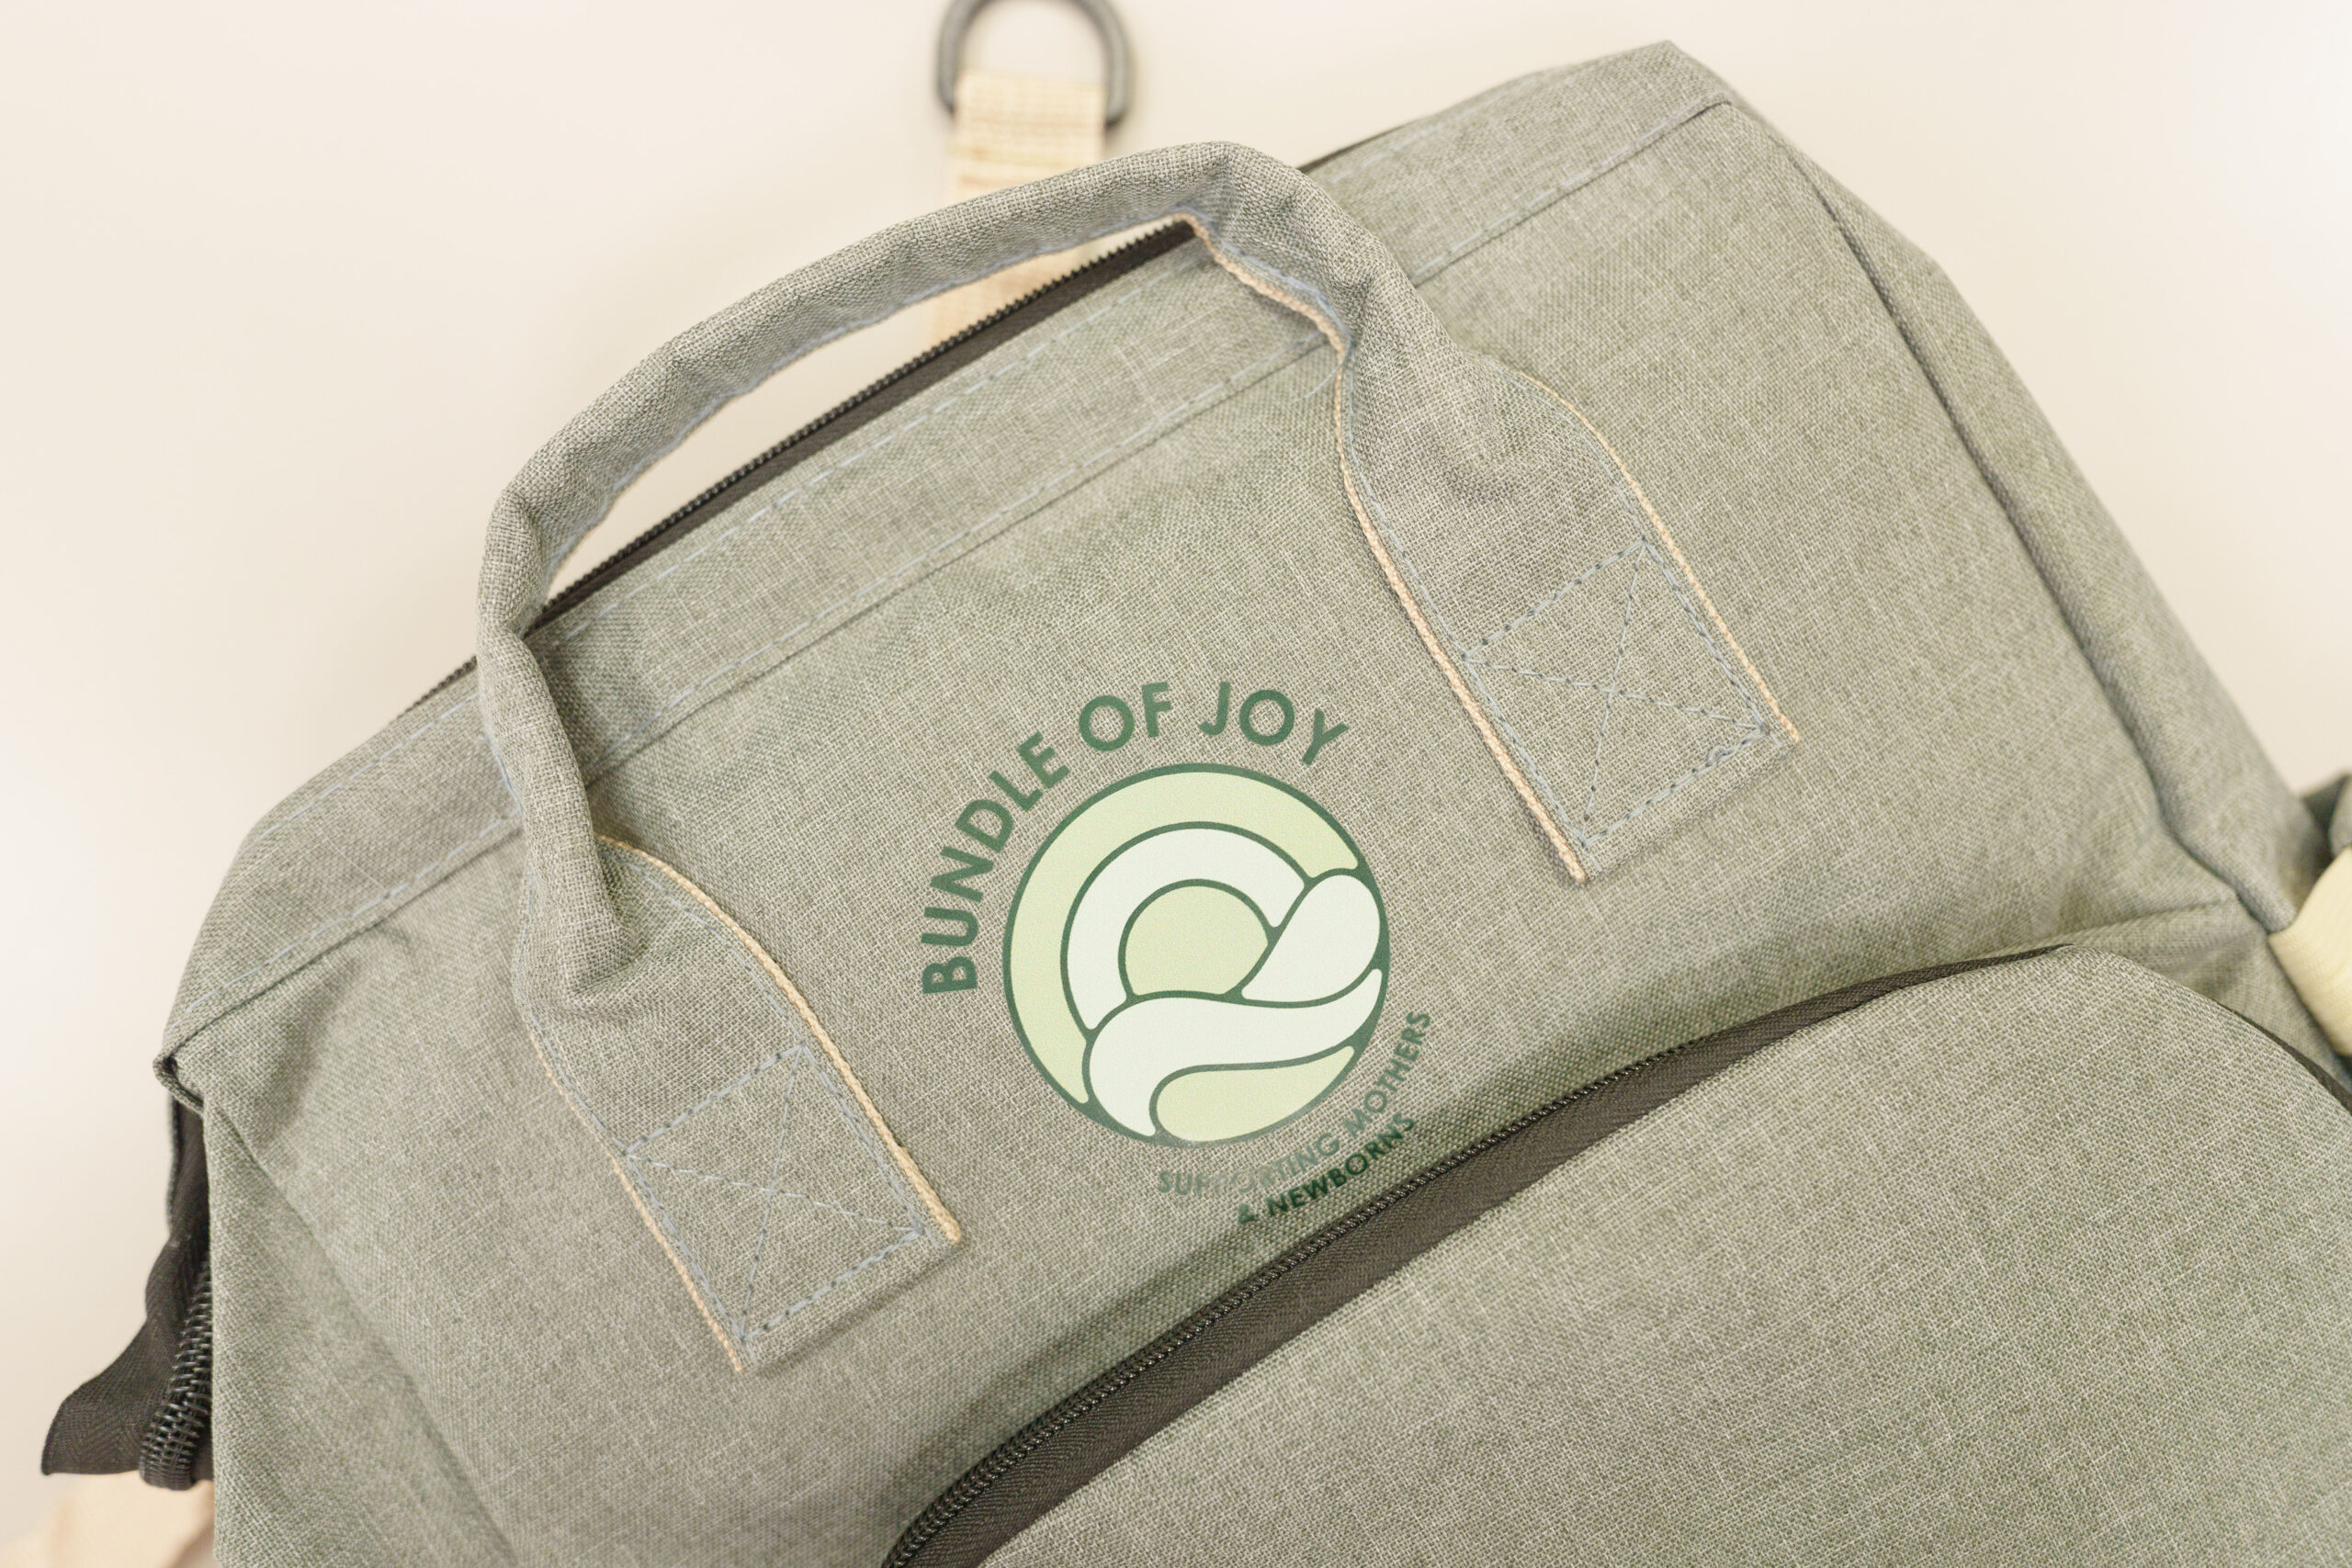 Bundle of Joy backpack